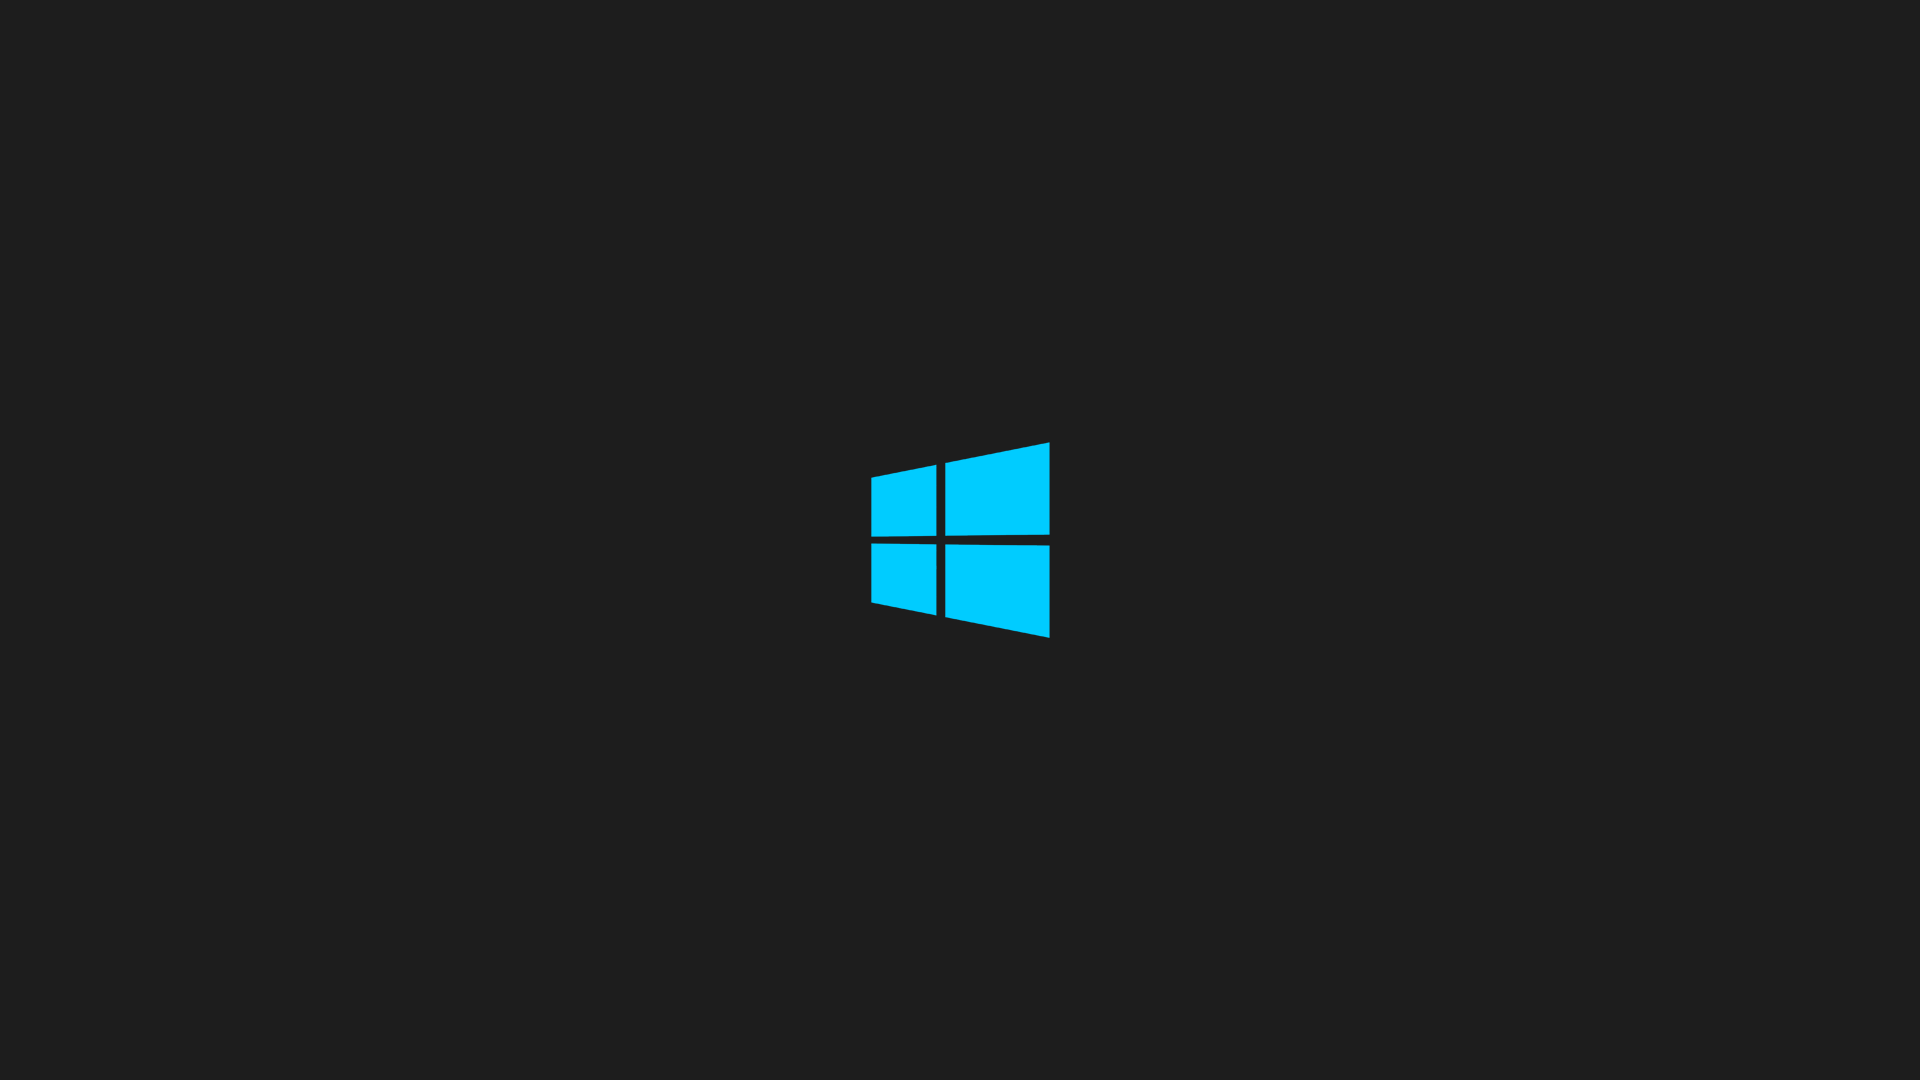 Windows 8 Wallpapers 1080p - Wallpaper Cave